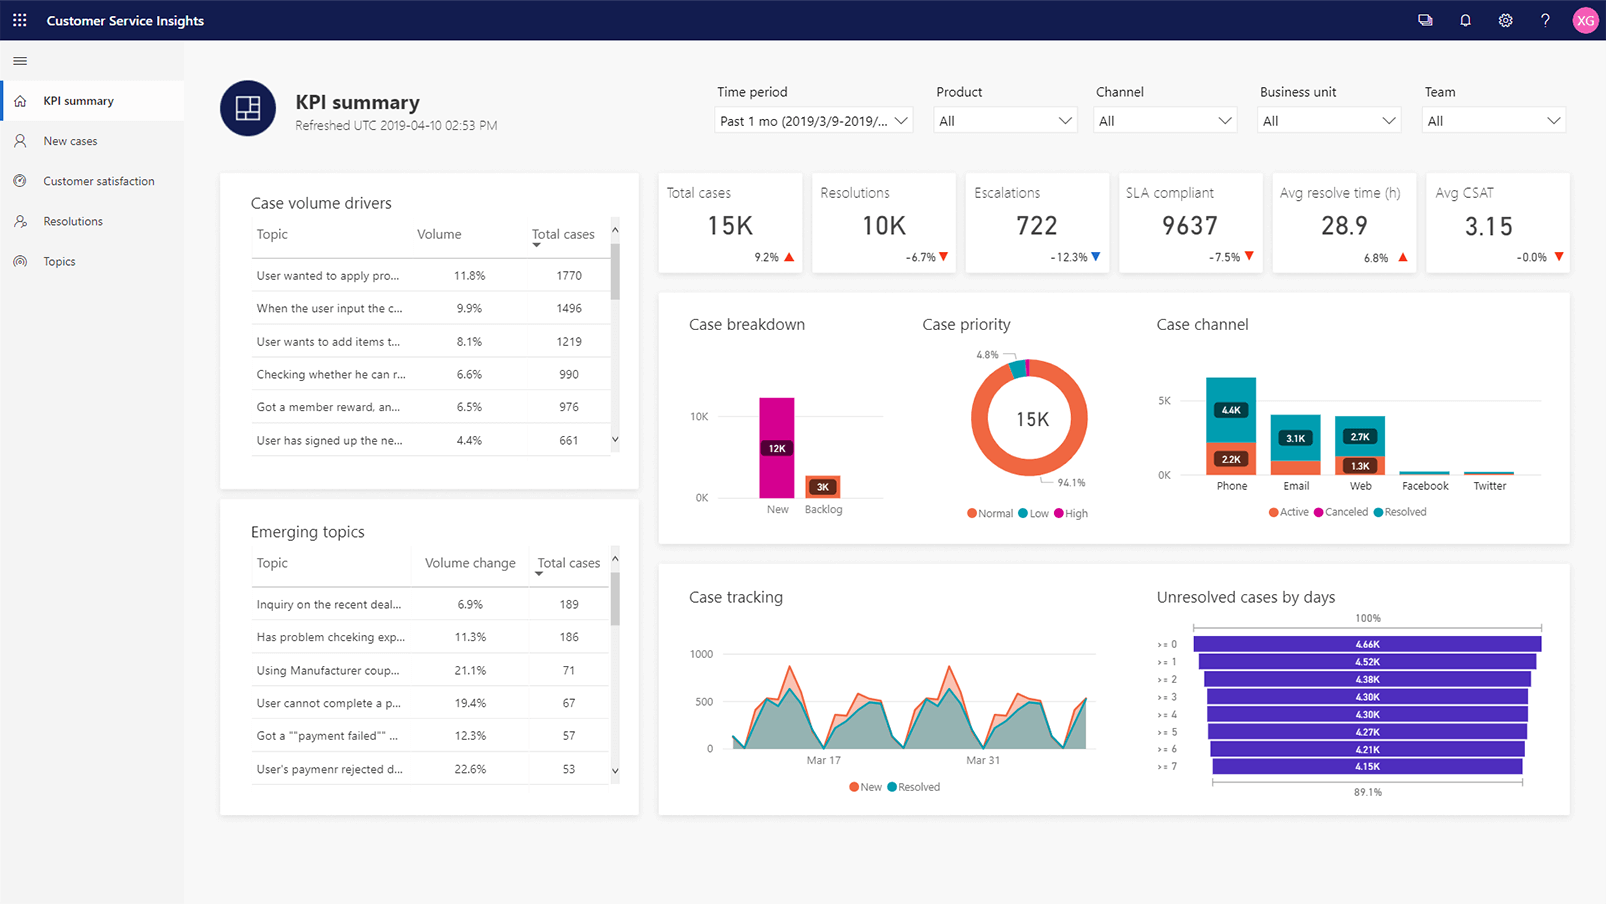 Screenshot of the Dynamics 365 Customer Service Insights interface